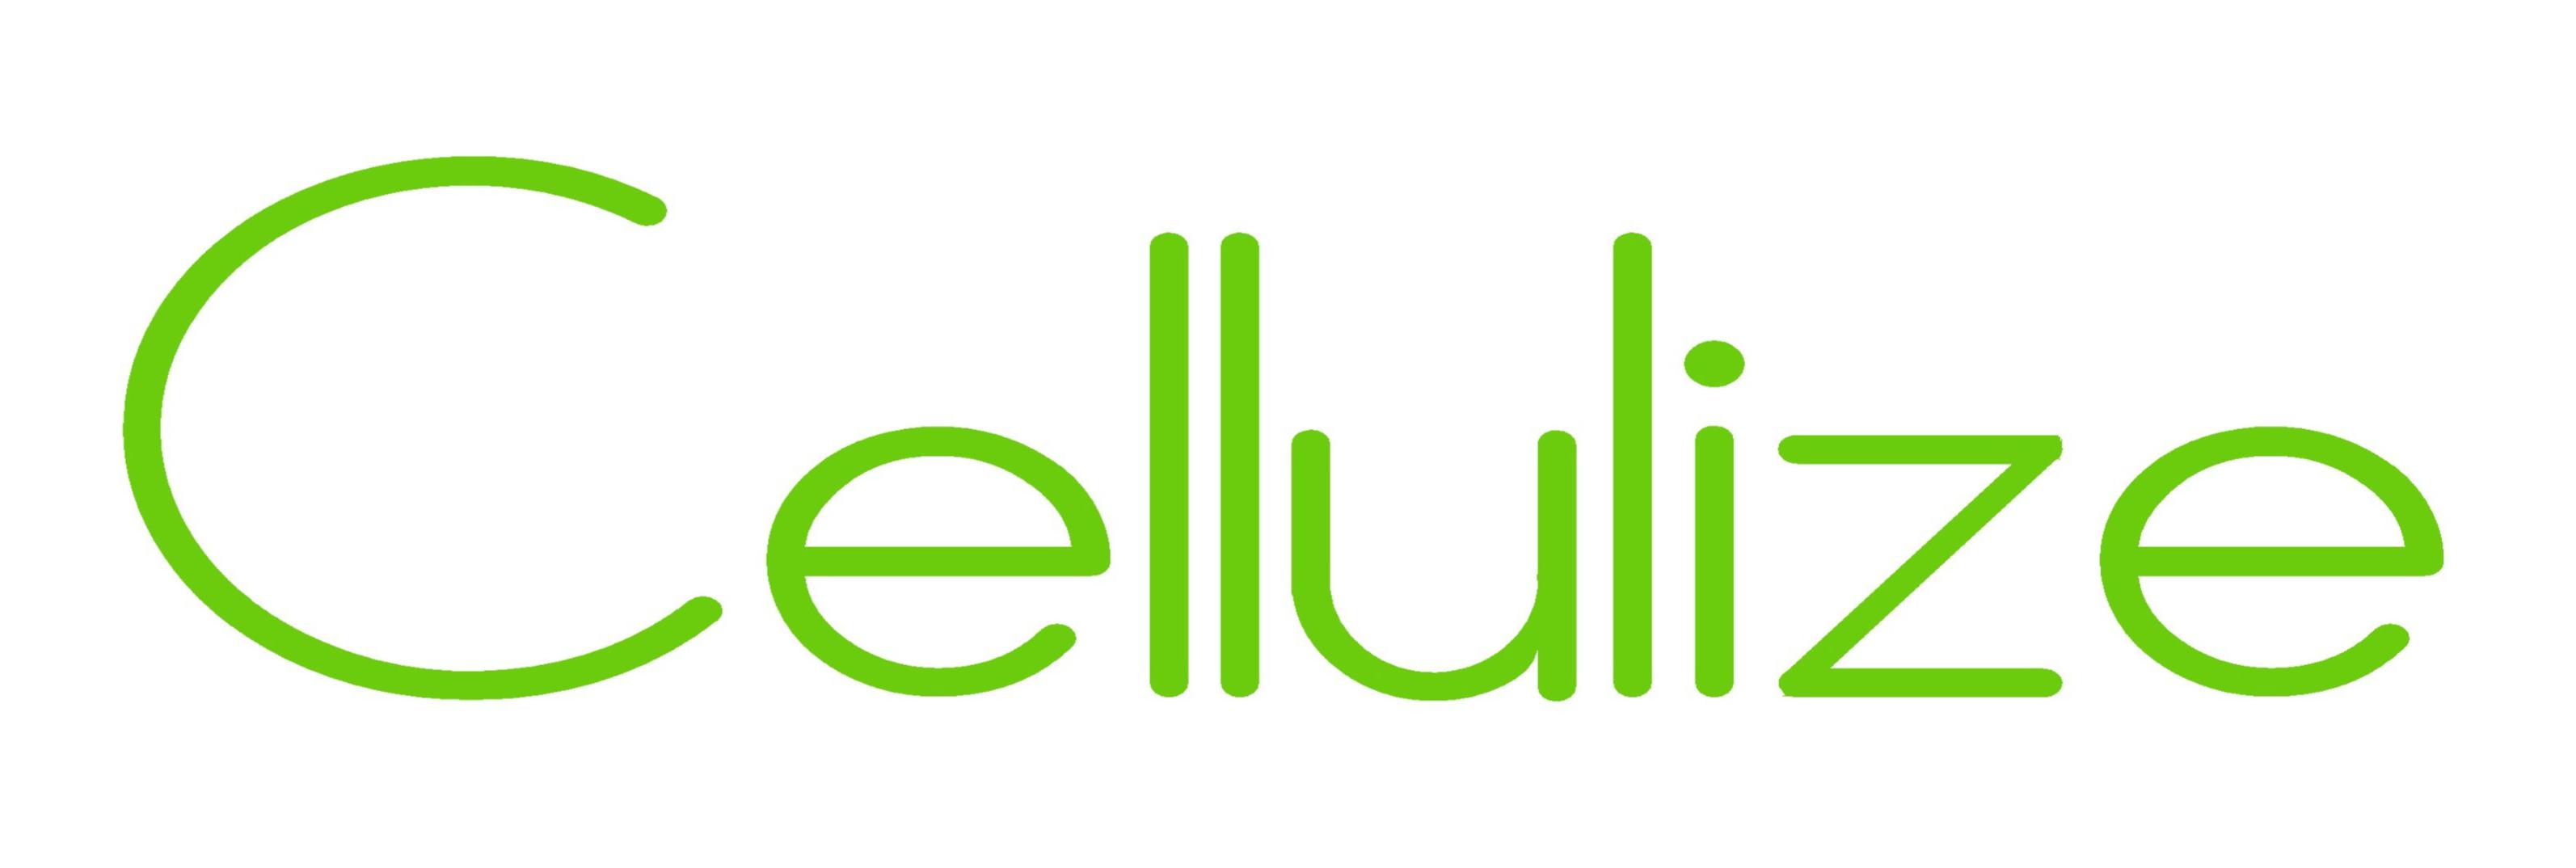 Trademark Logo CELLULIZE